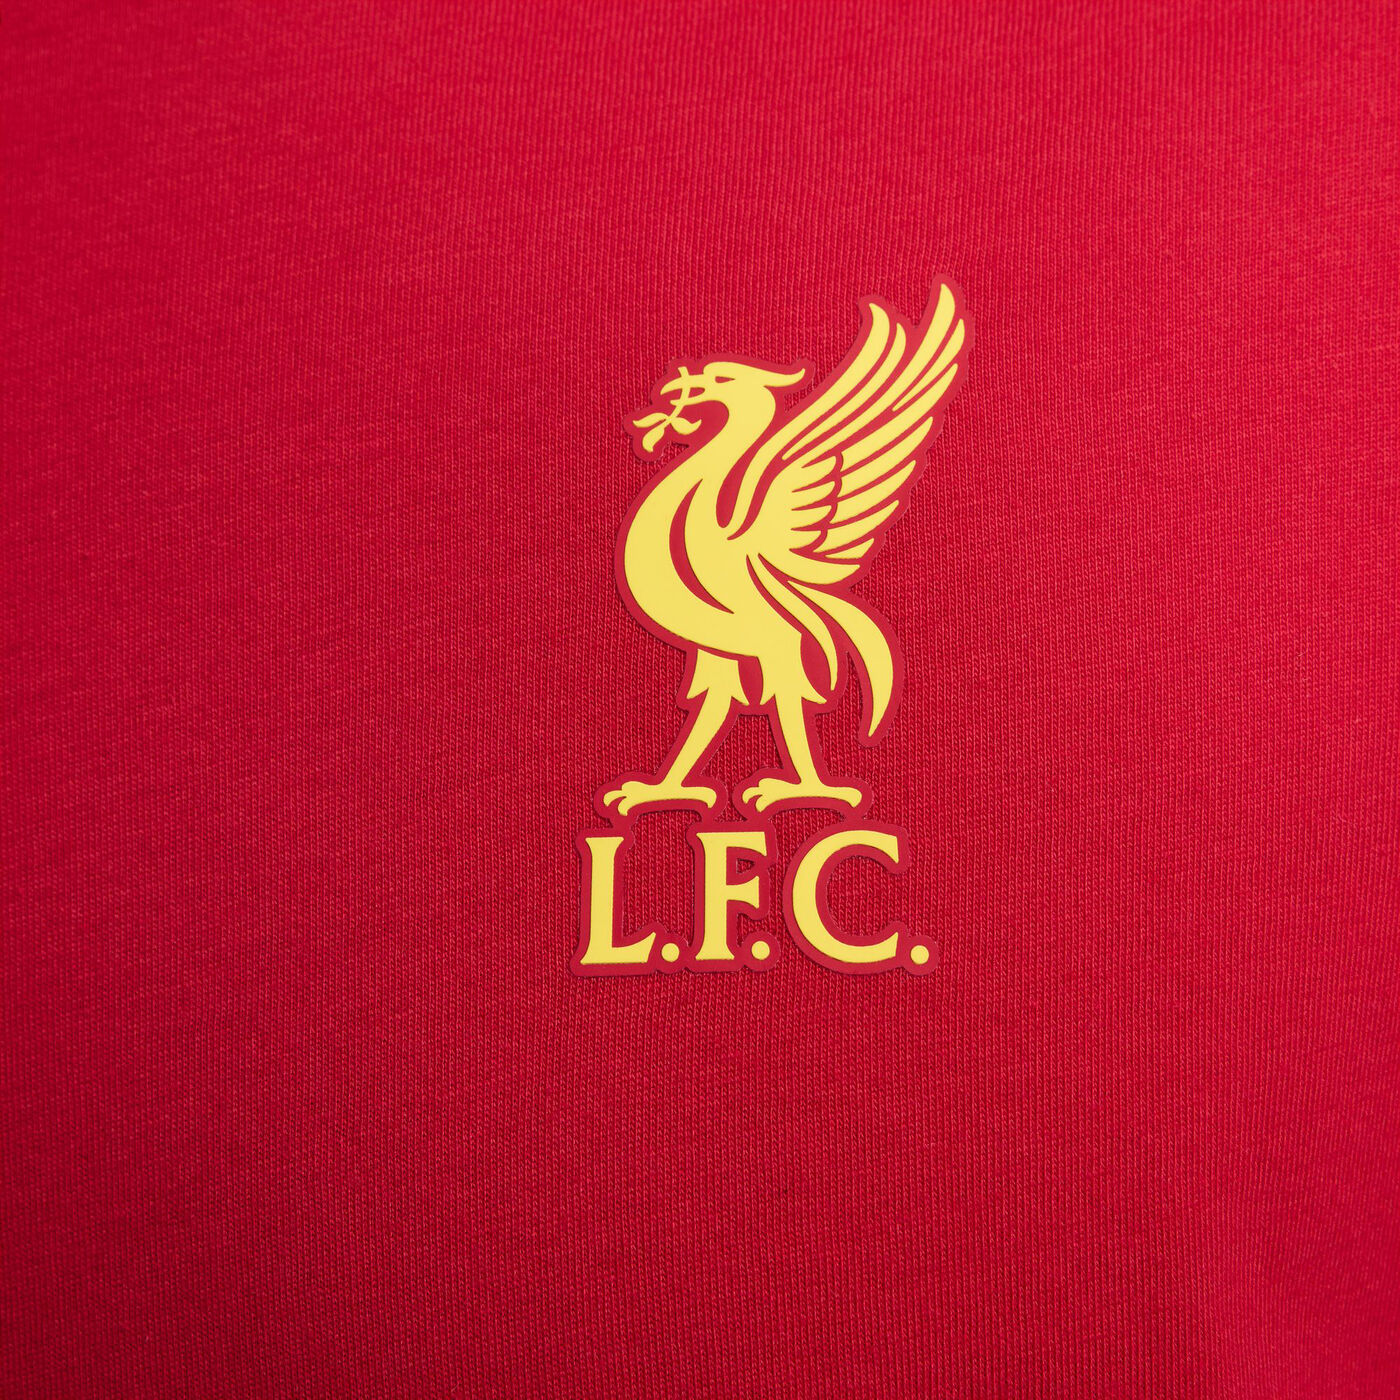 Men's Liverpool Essential T-Shirt